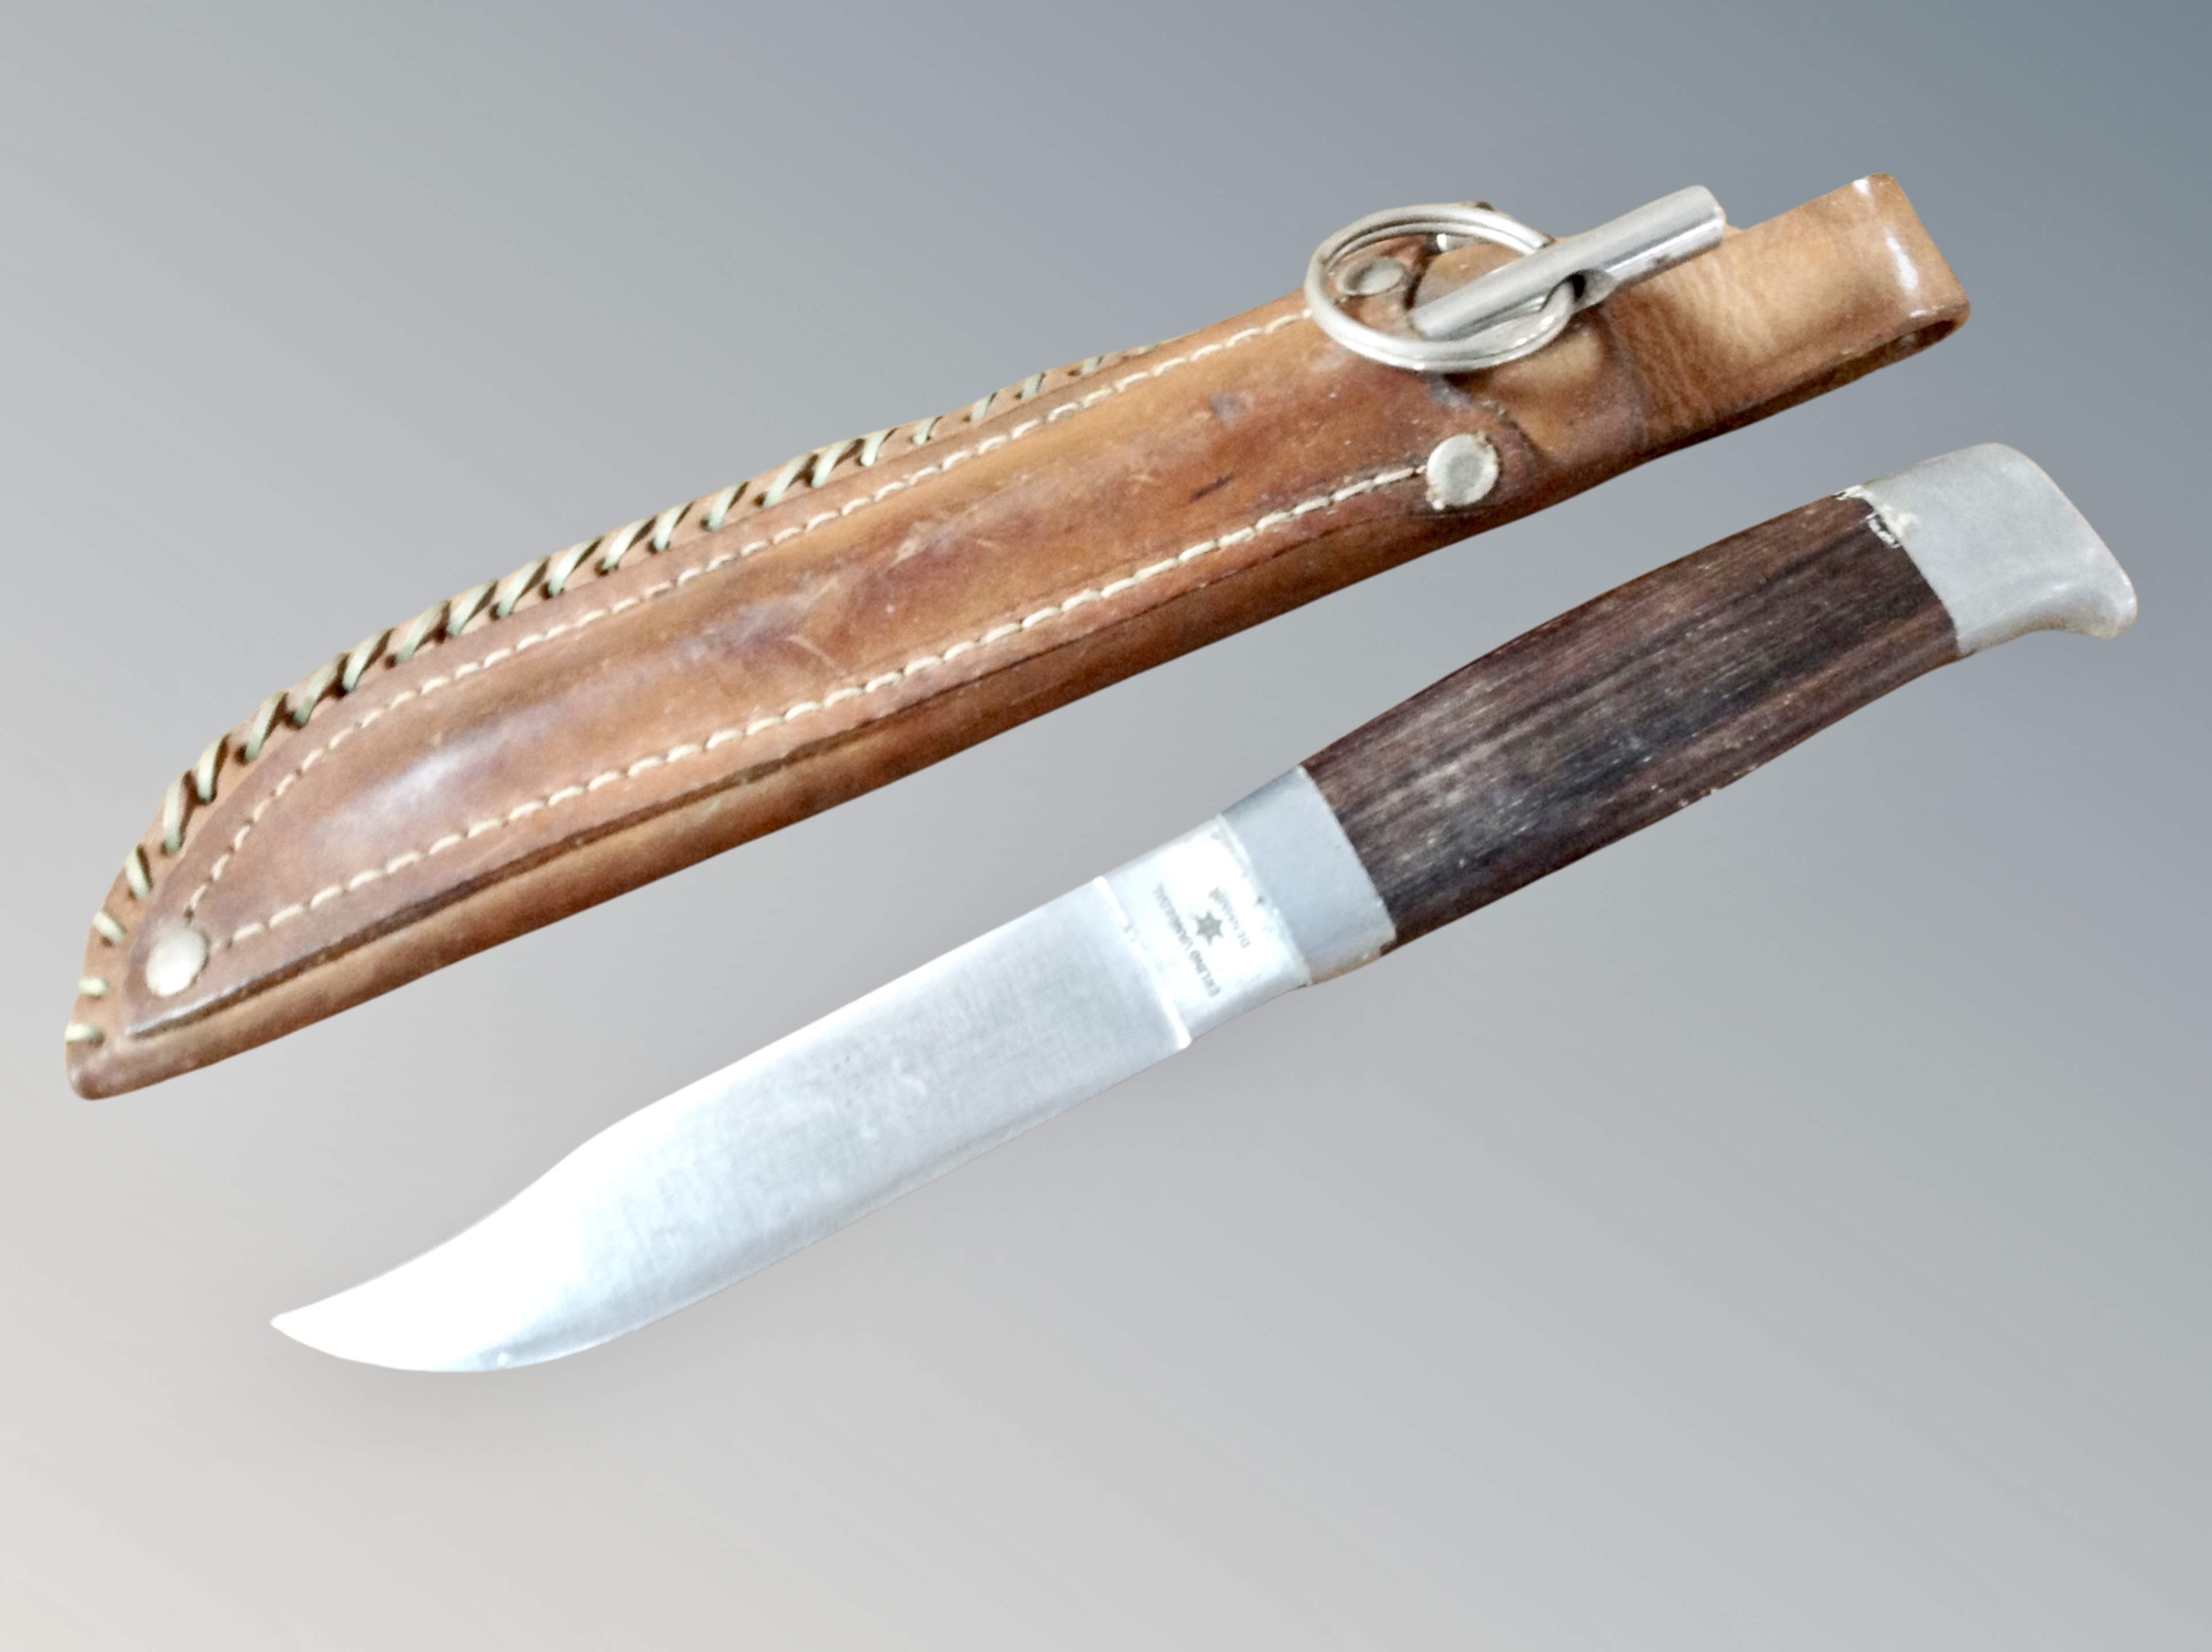 An Erling Vangadal Danish hunting knife in leather sheath